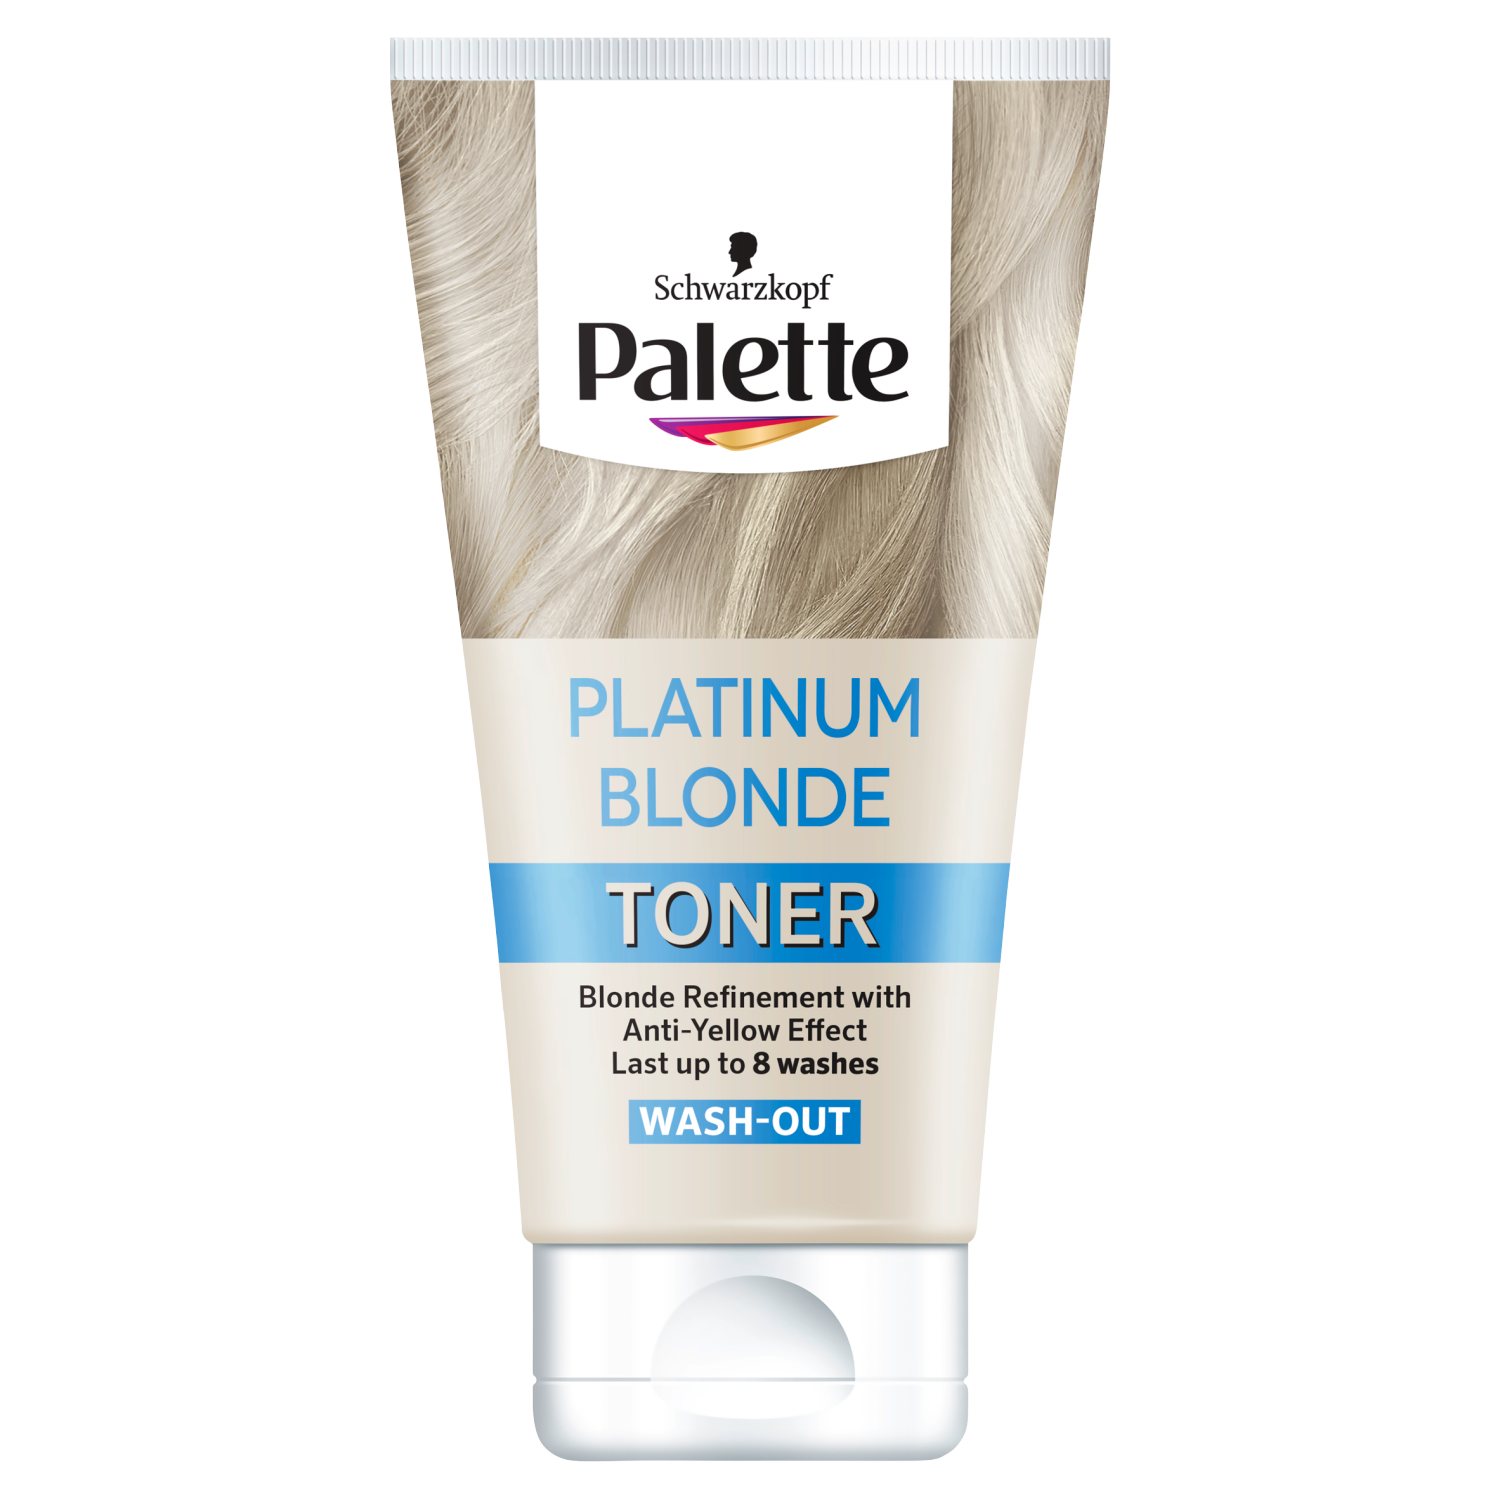 Palette Platinum Blonde Toner toner do włosów blond, 150 ml | hebe.pl